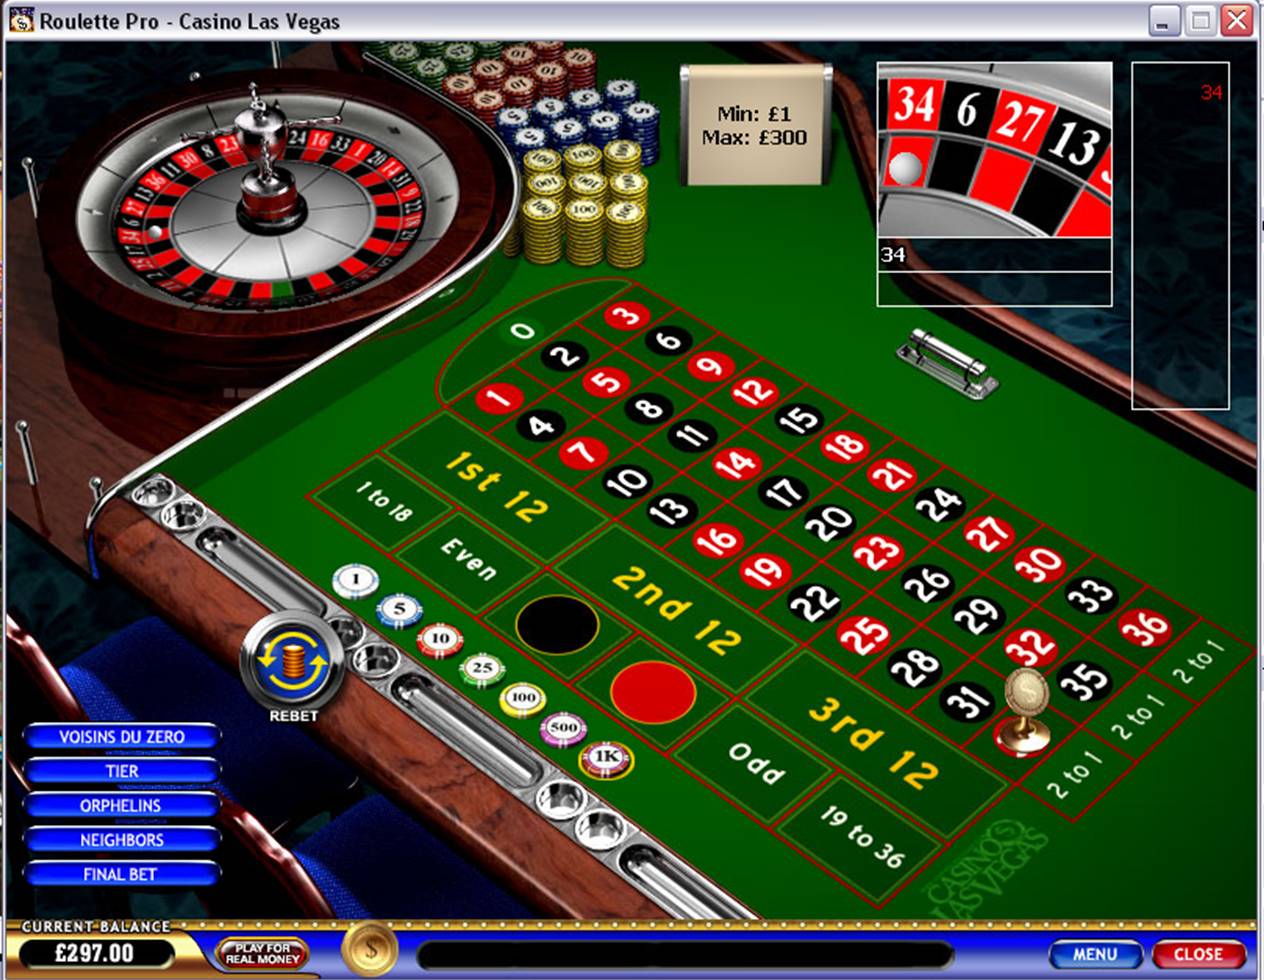 Las vegas casino - 1106